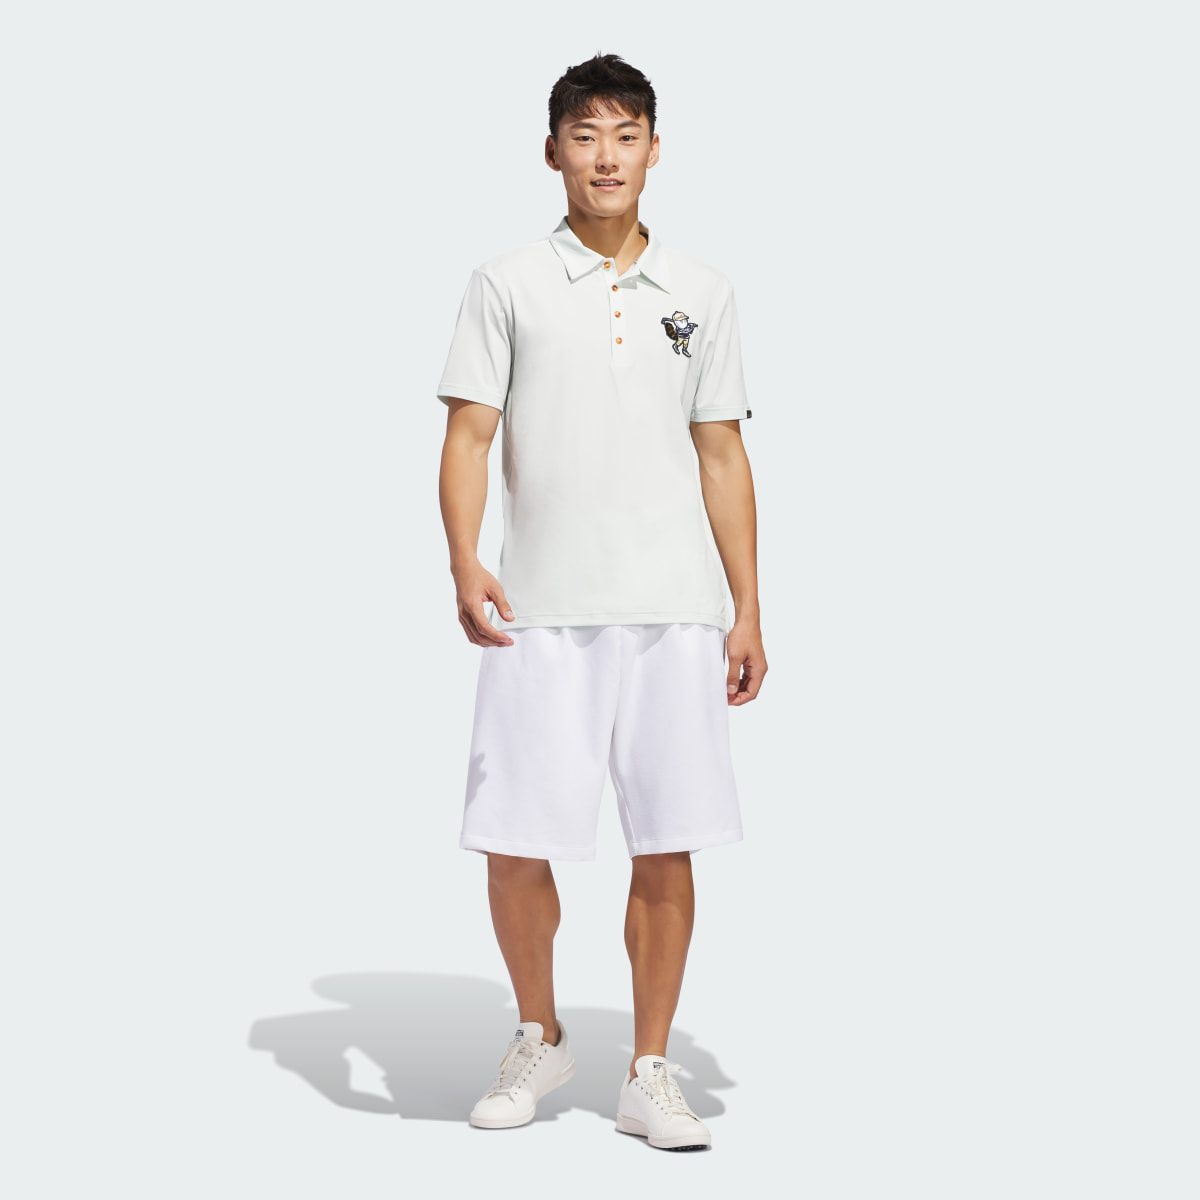 Adidas x Malbon Polo Shirt. 6